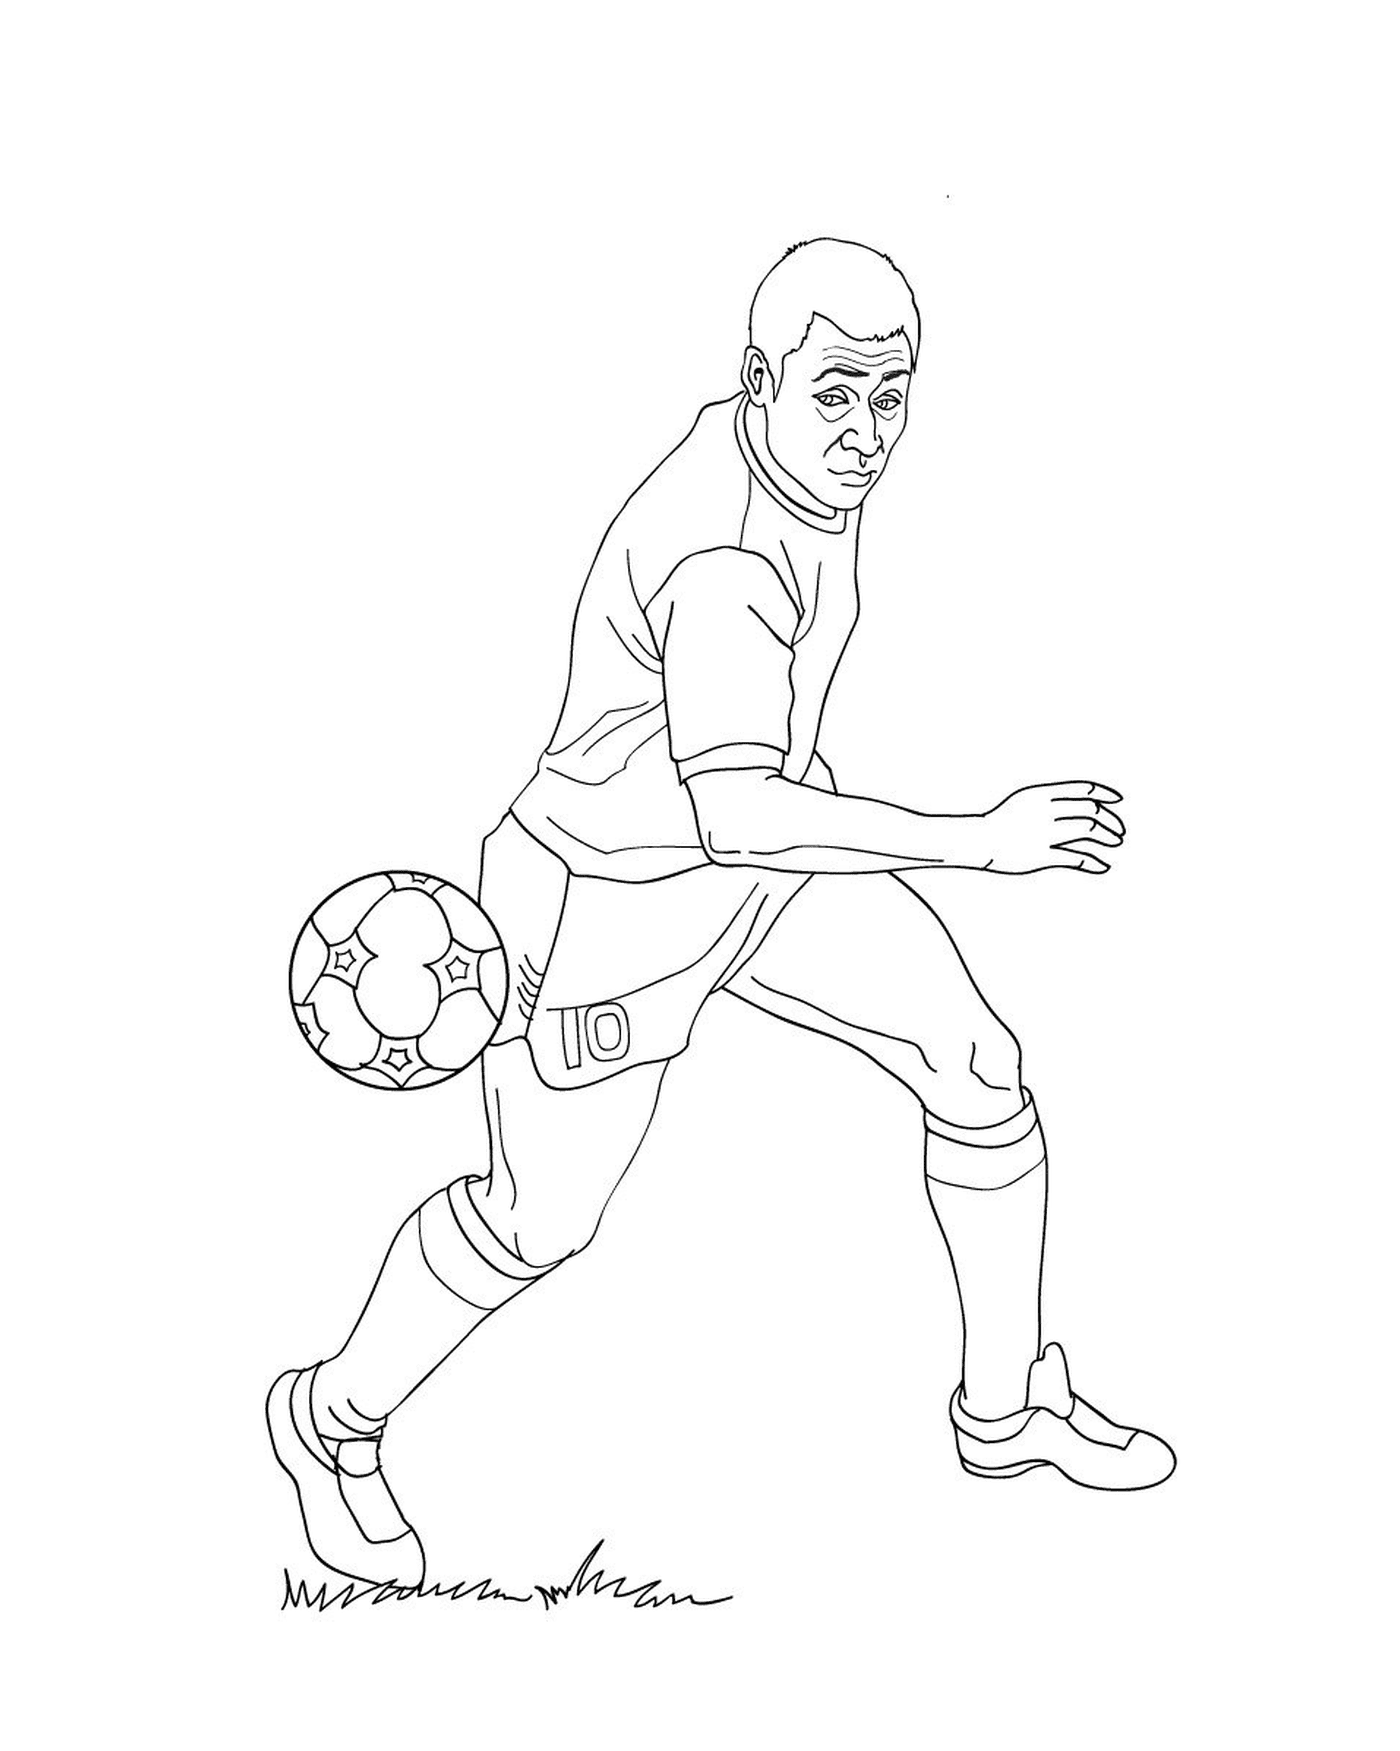  A man playing football 